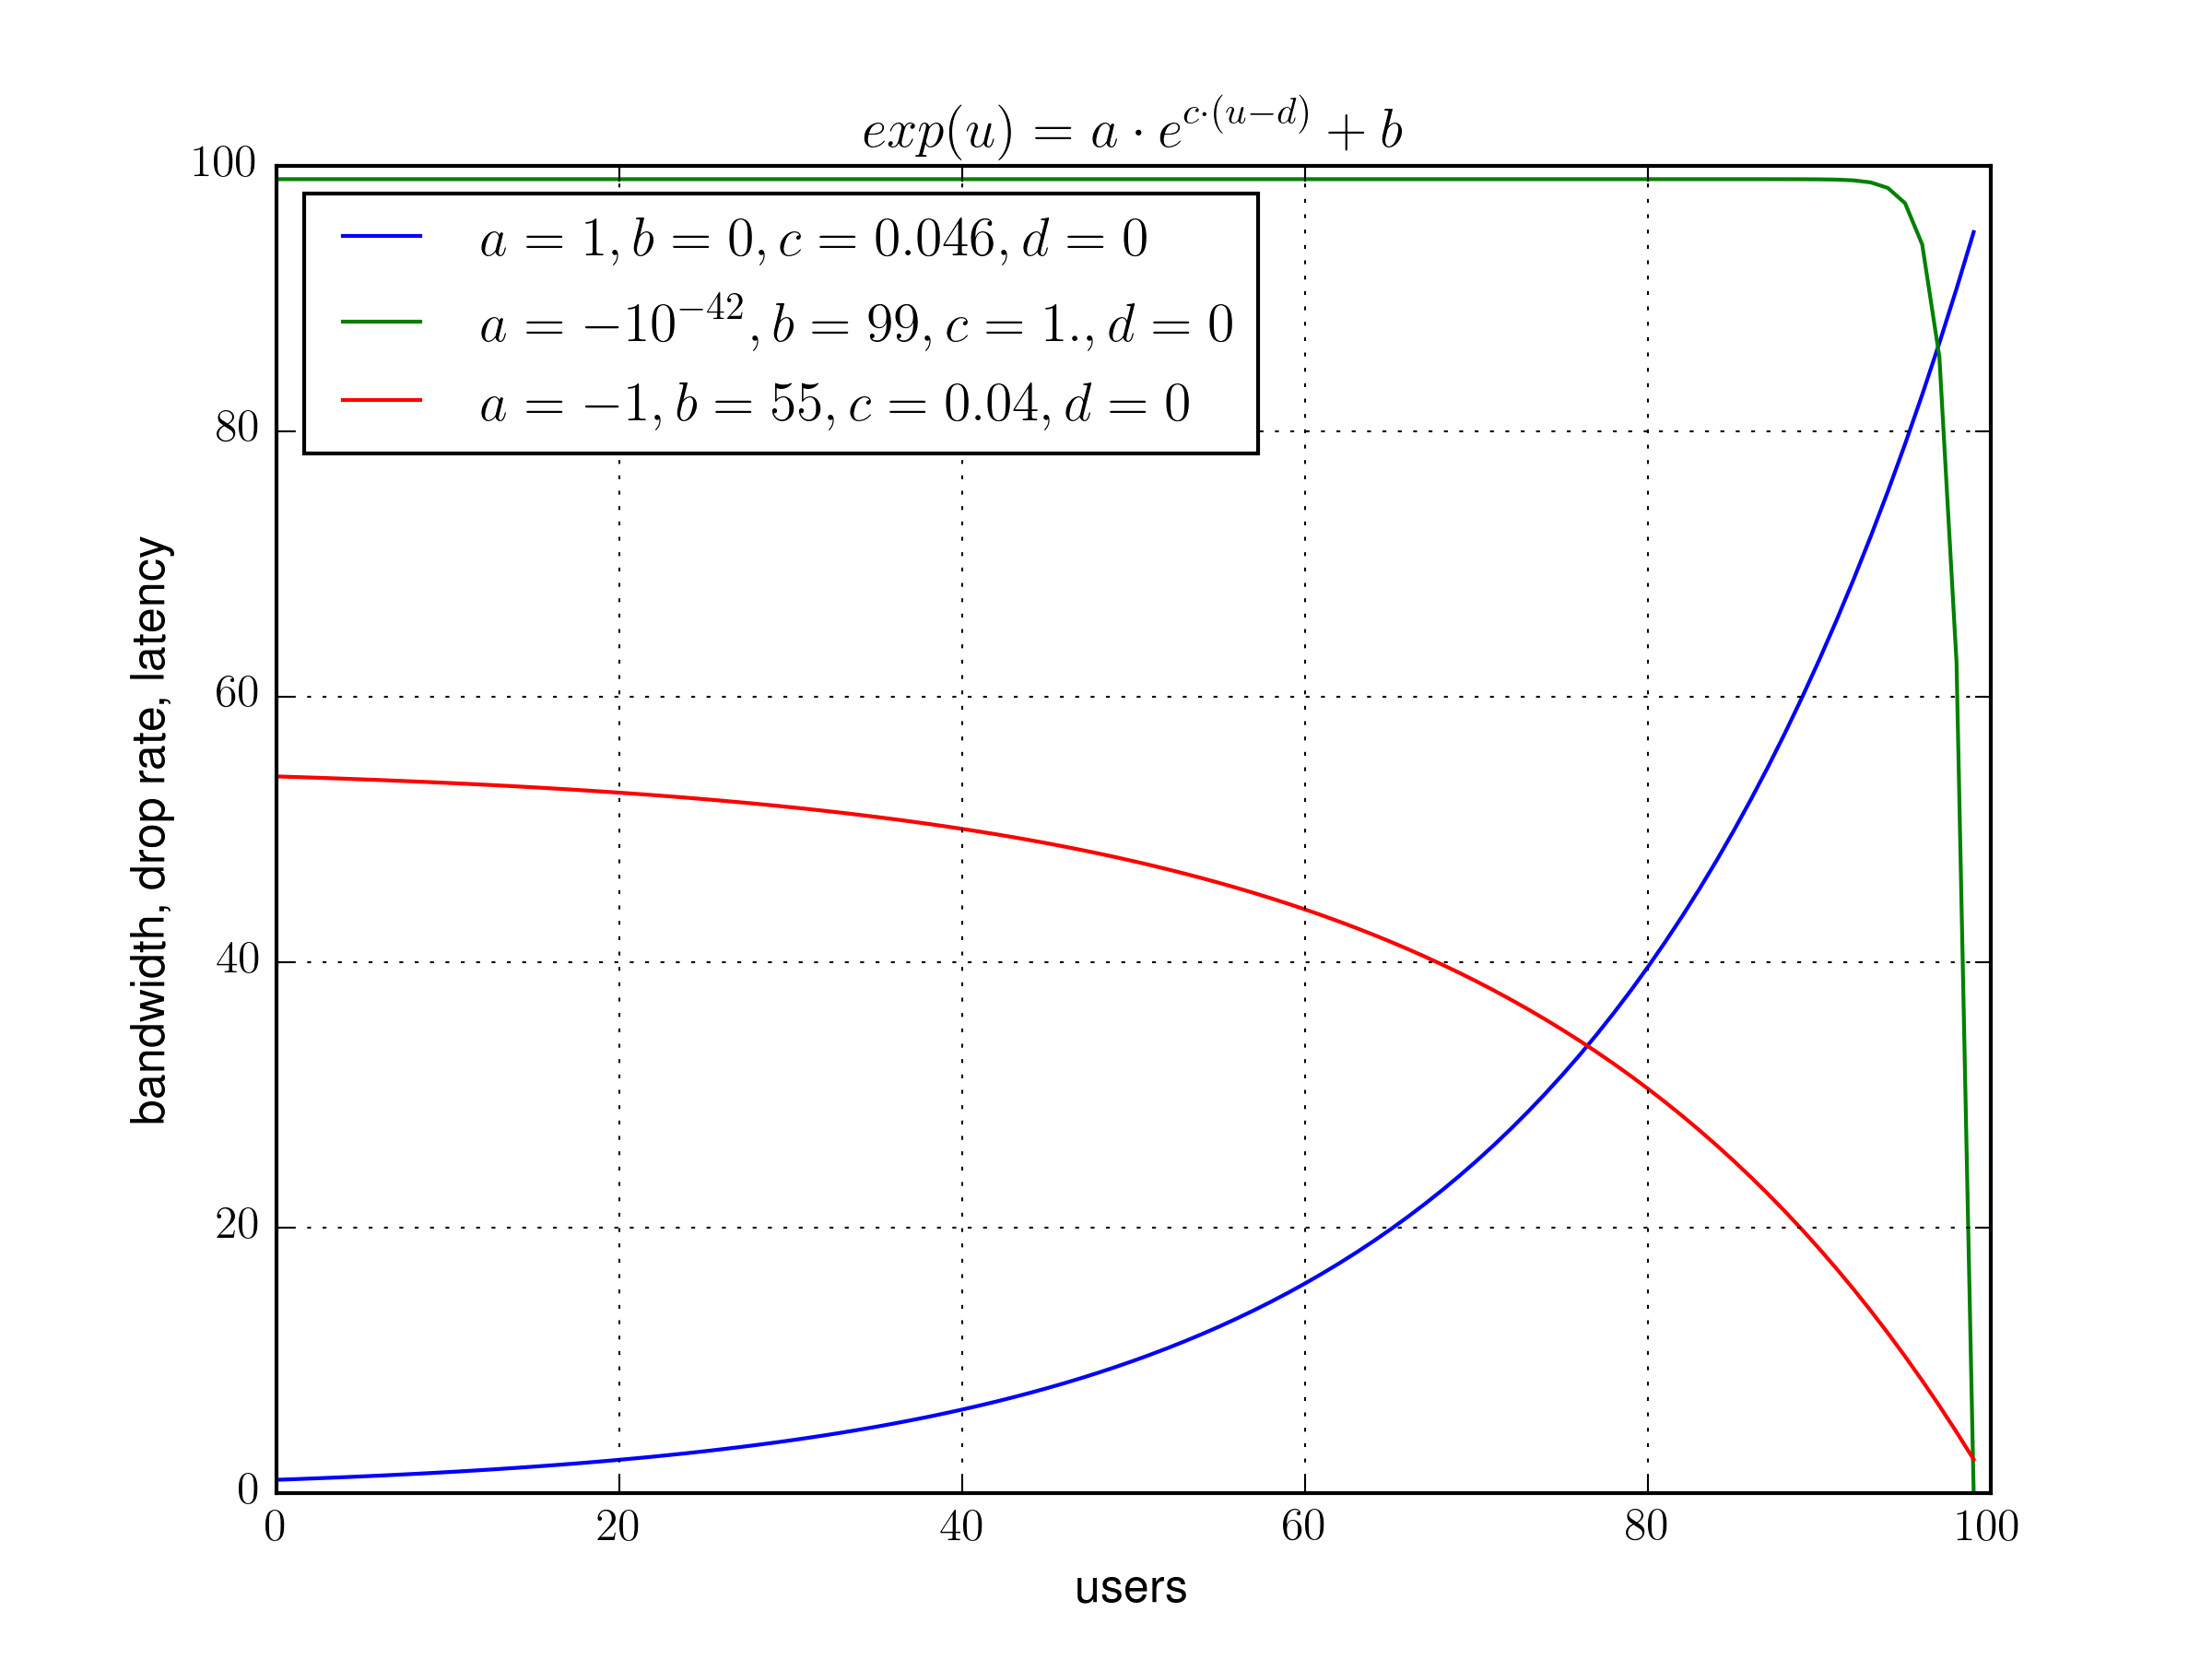 src/de/tud/kom/p2psim/impl/topology/views/fiveg/models/img/exponential.png